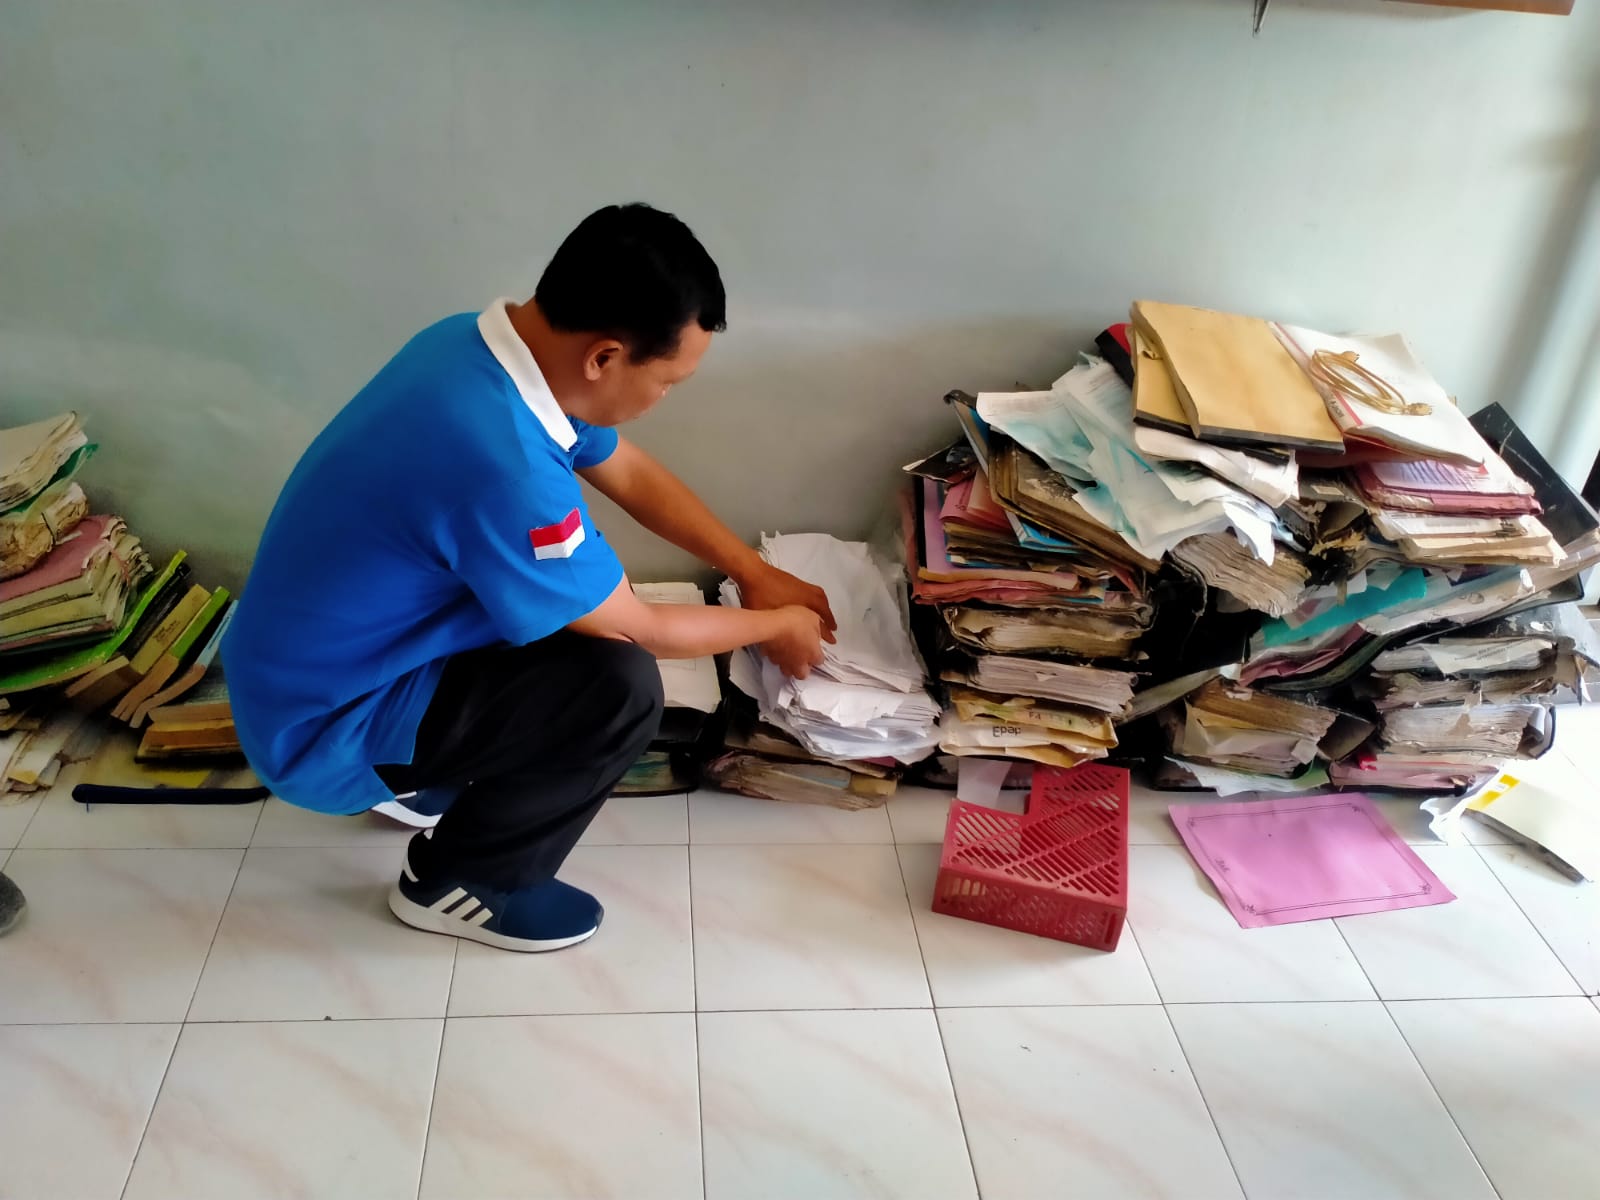 Kolaborasi ANRI, Dispusip Jawa Timur, dan Dispusip Trenggalek Menyelamatkan Arsip yang Terdampak Banjir di Trenggalek